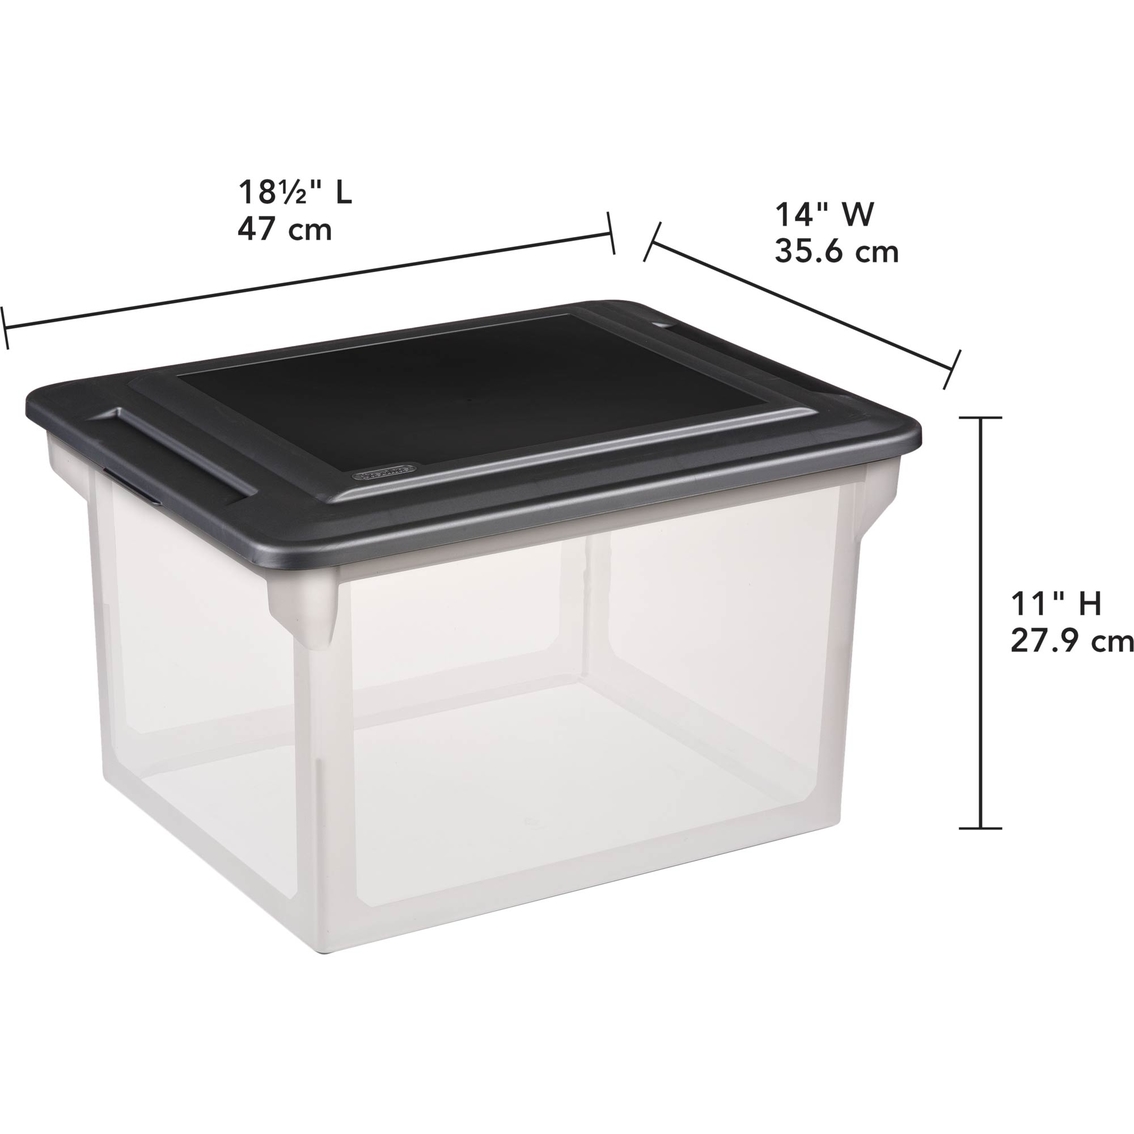 Sterilite File Box with Black Lid - Image 2 of 4